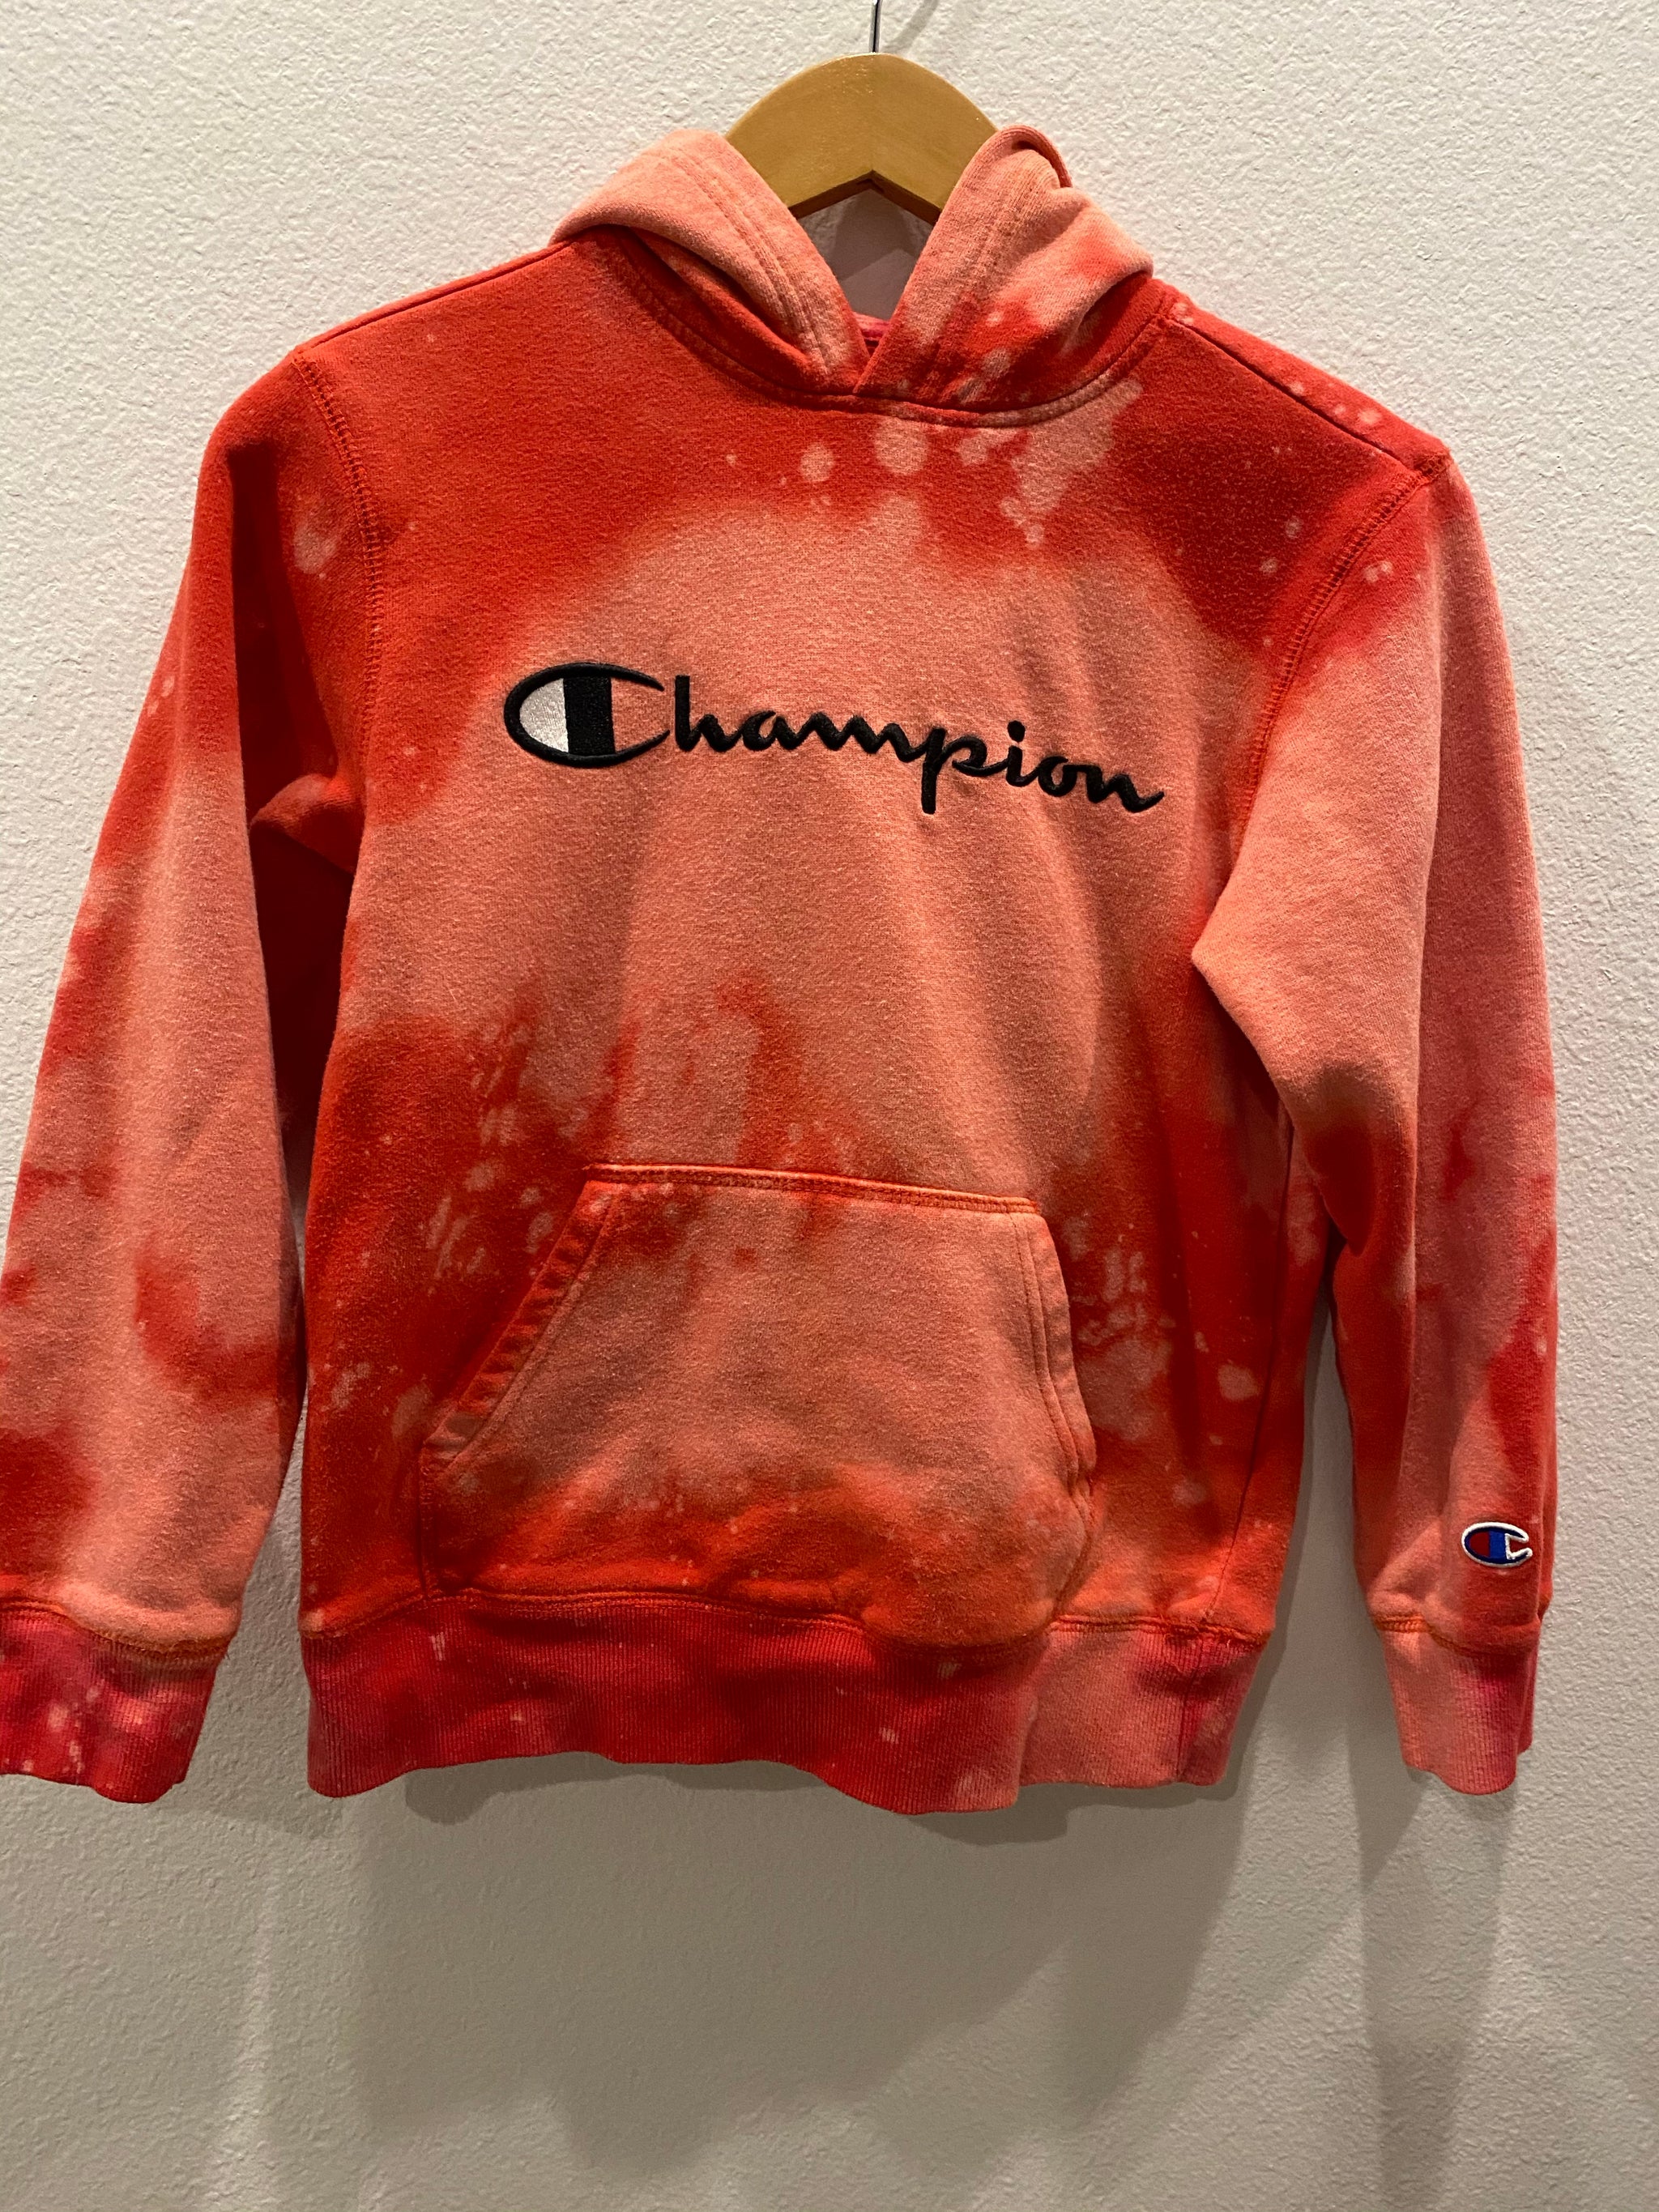 : Red Champion Hoodie Pullover : medium - ShopFringeClothing.com